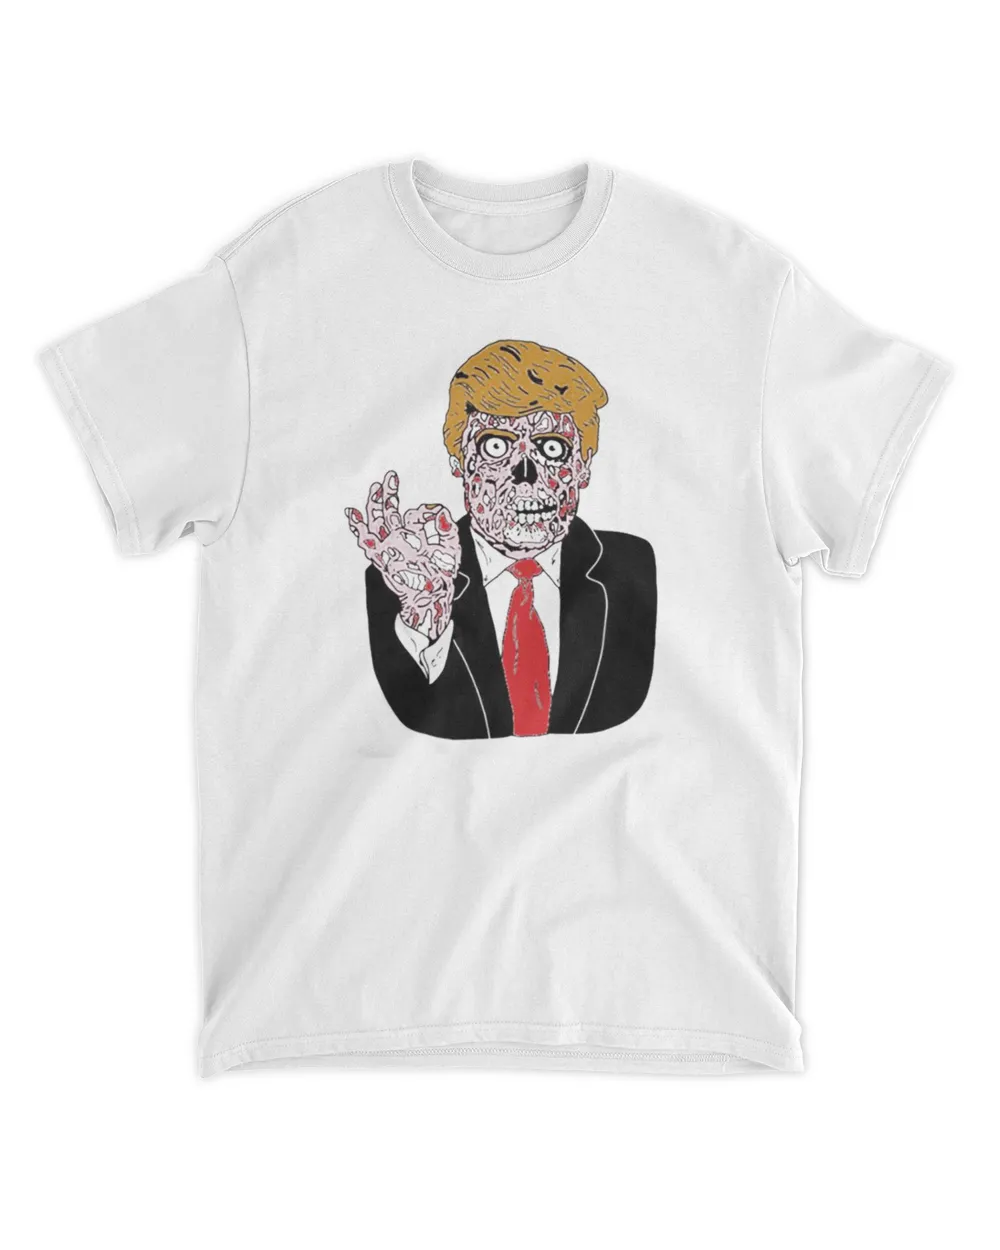 Zombie Donald Trump Halloween Shirt